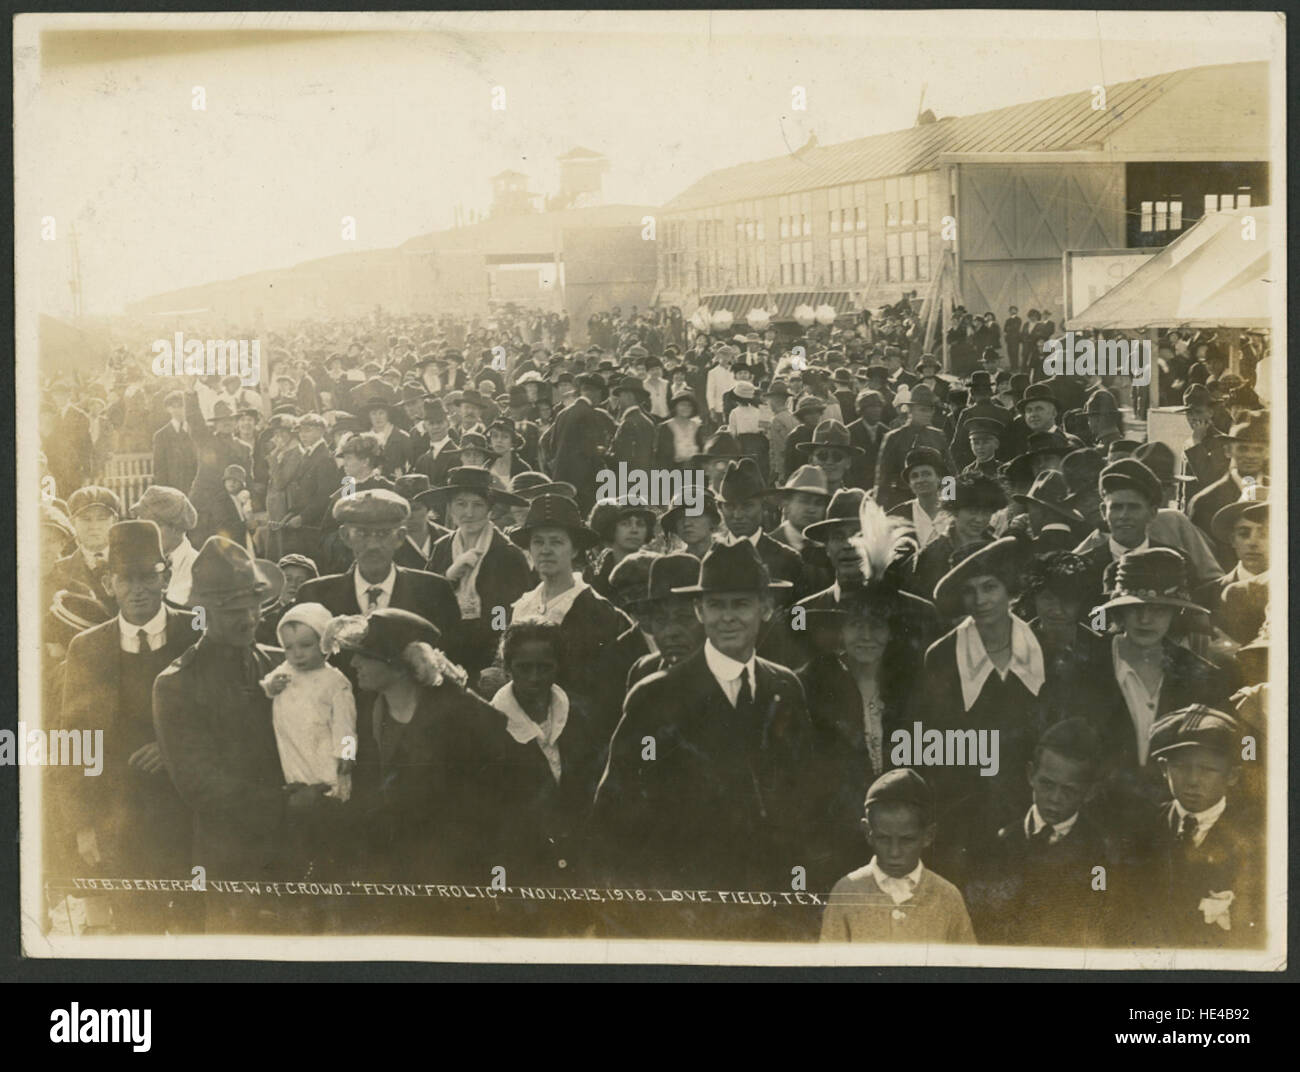 Vista generale della folla " Flyin' Frolic' Nov, 12-13, 1918 AMORE Foto Stock